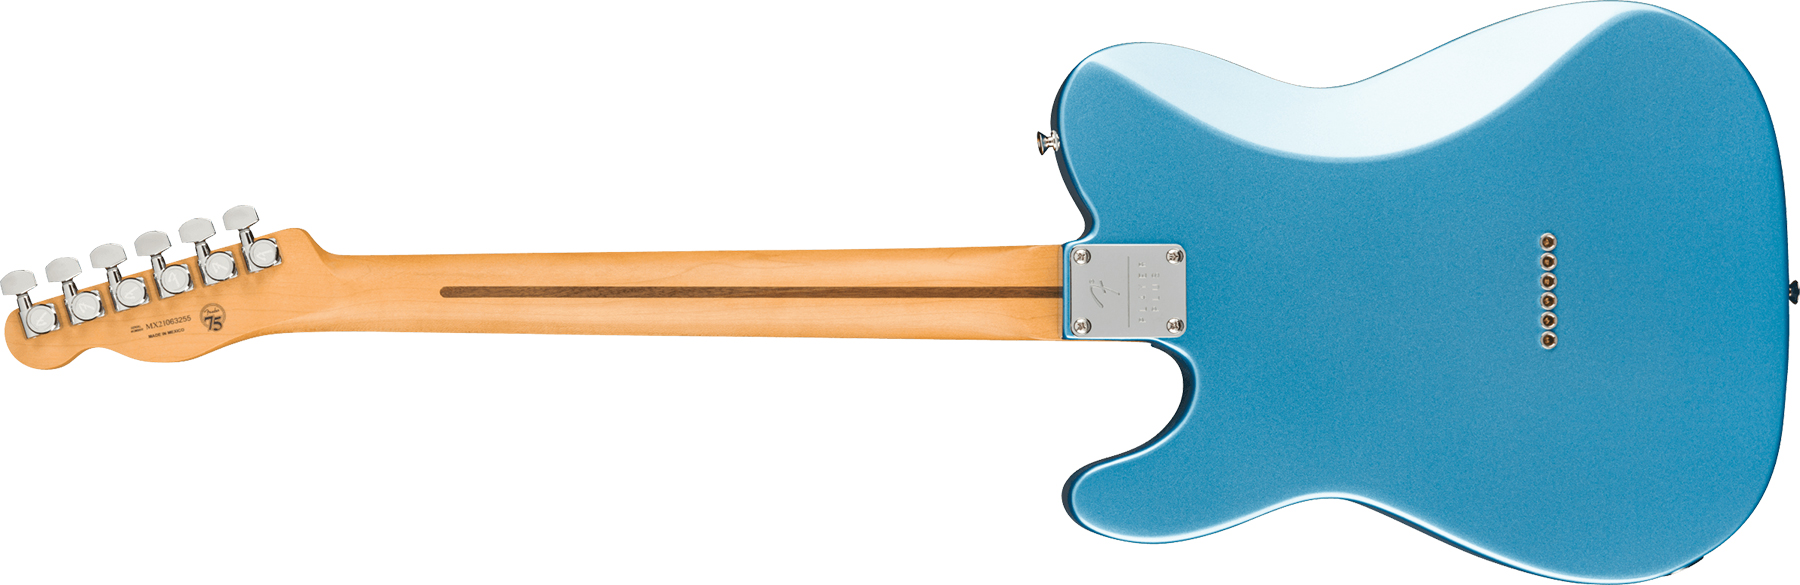 Fender Tele Player Plus Nashville Mex 3s Ht Pf - Opal Spark - Tel shape electric guitar - Variation 1